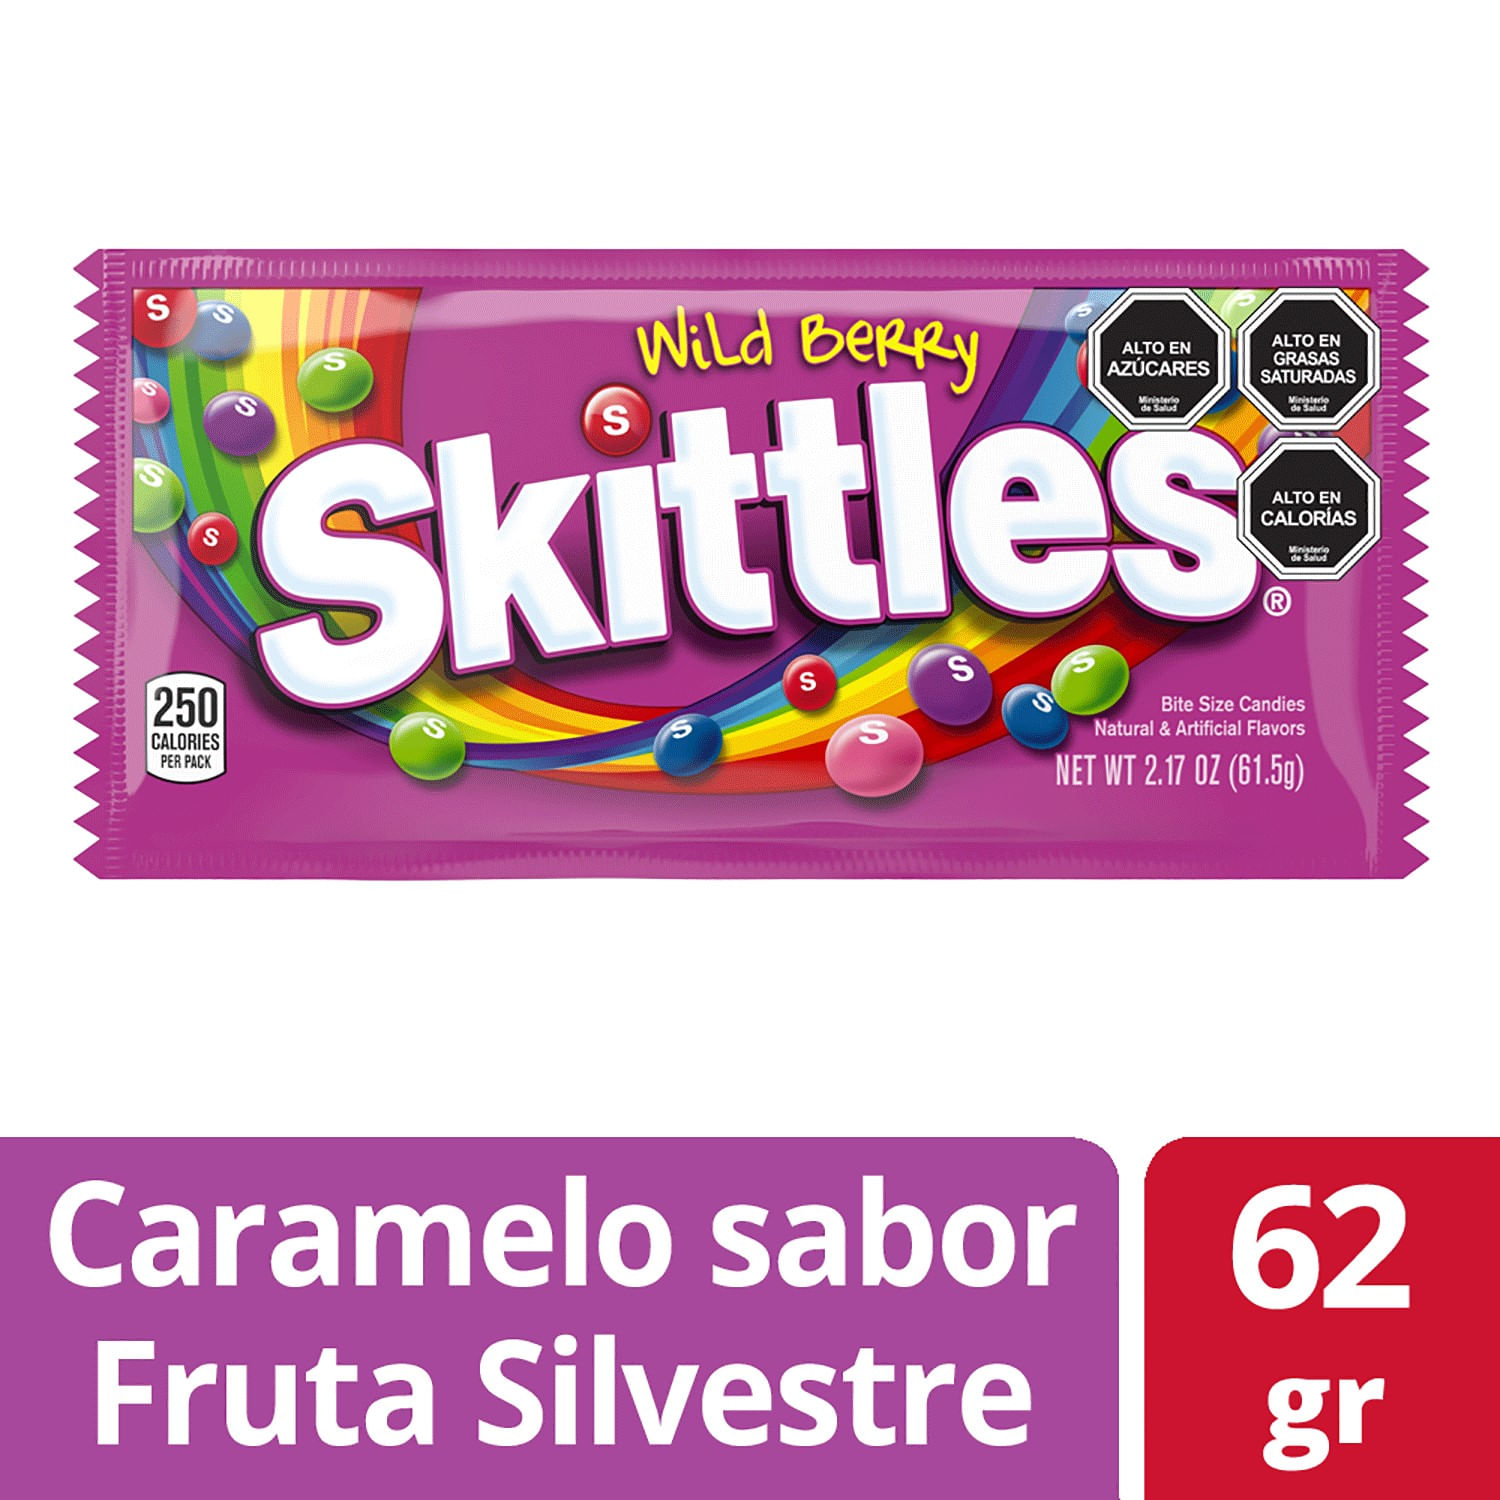 Caramelos Skittles wildberry singles 62 g